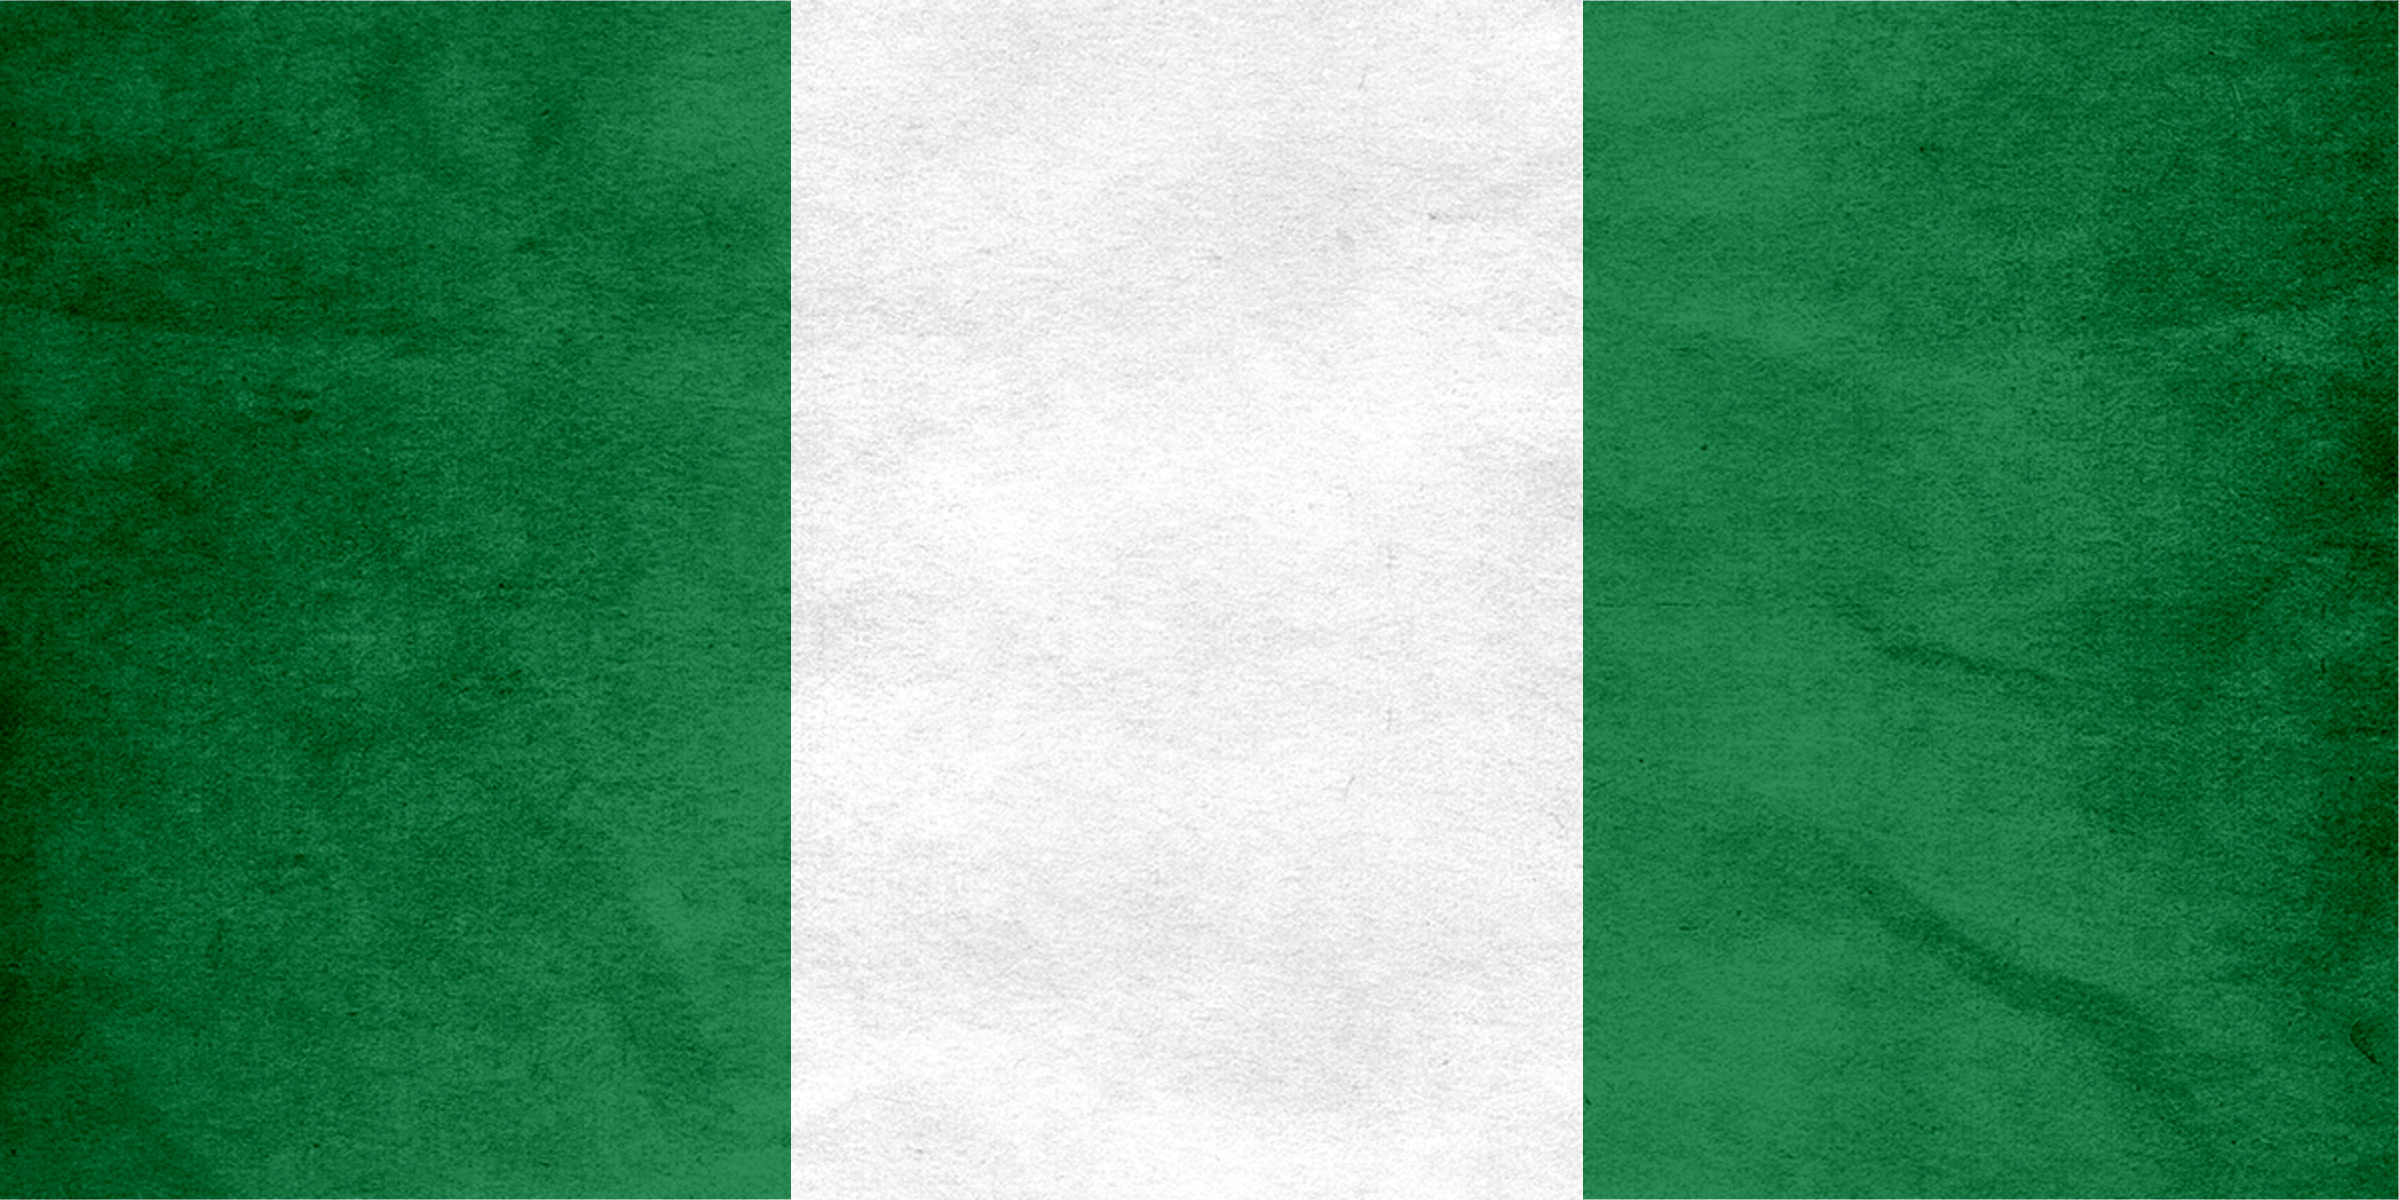 NigerianFlag.jpg